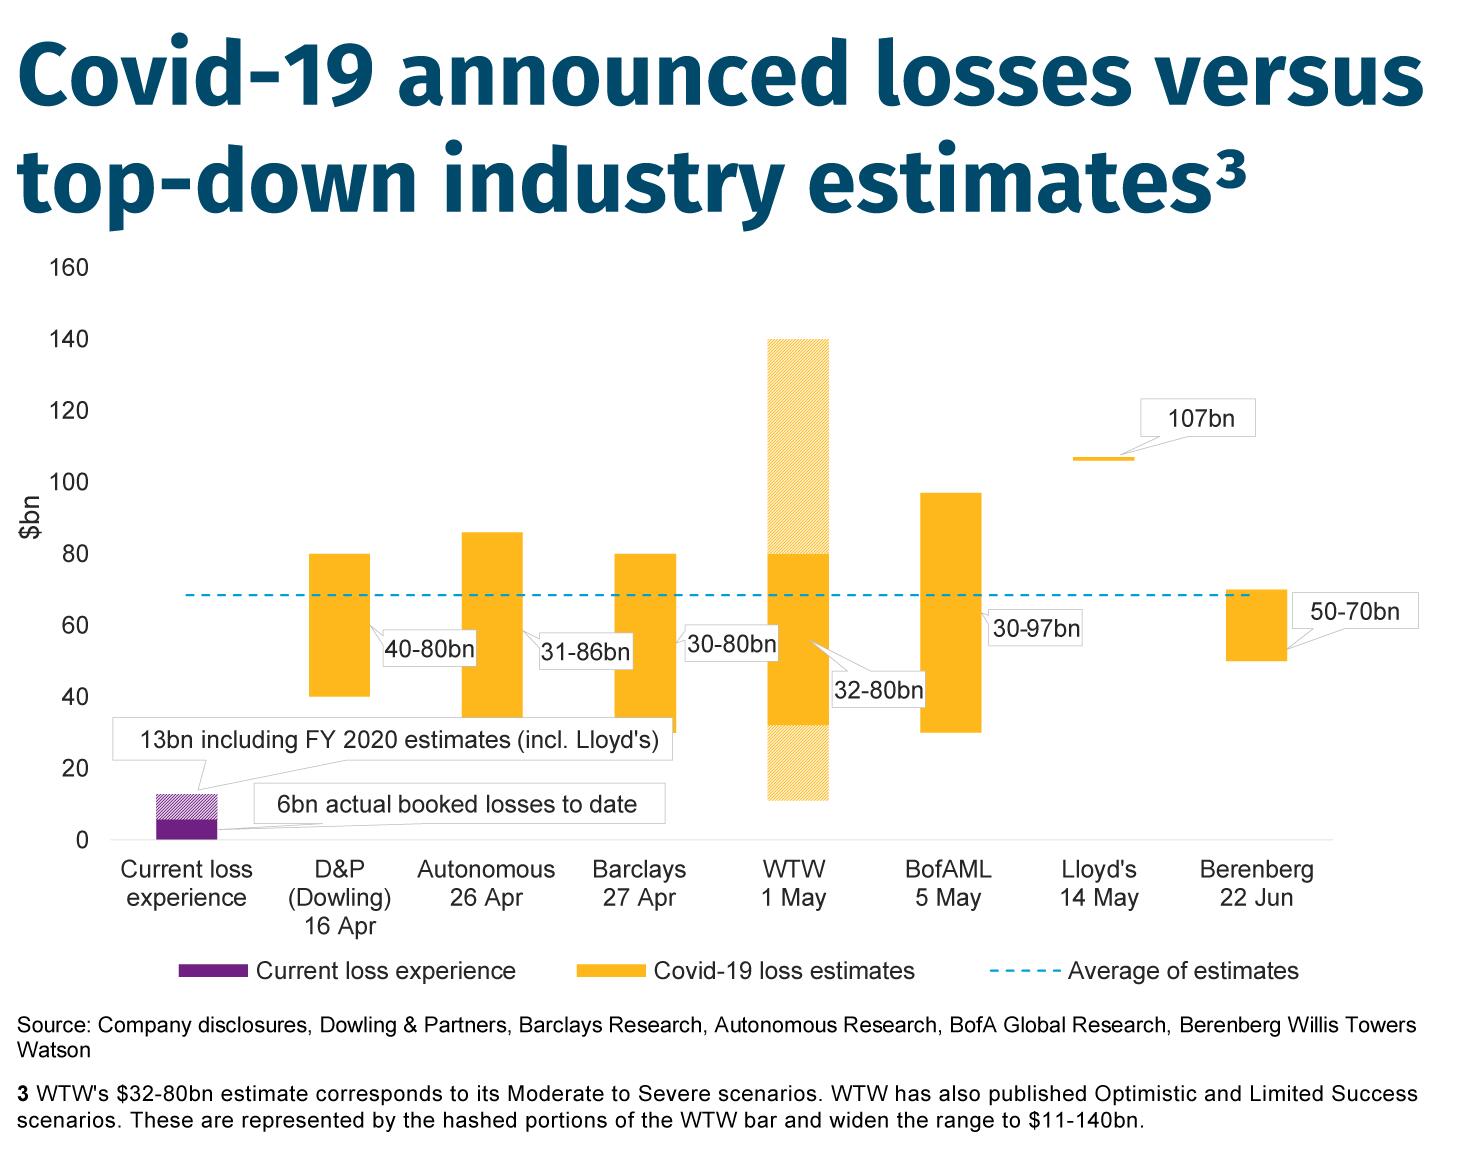 Covid-19 announced losses versus top-down industry estimates